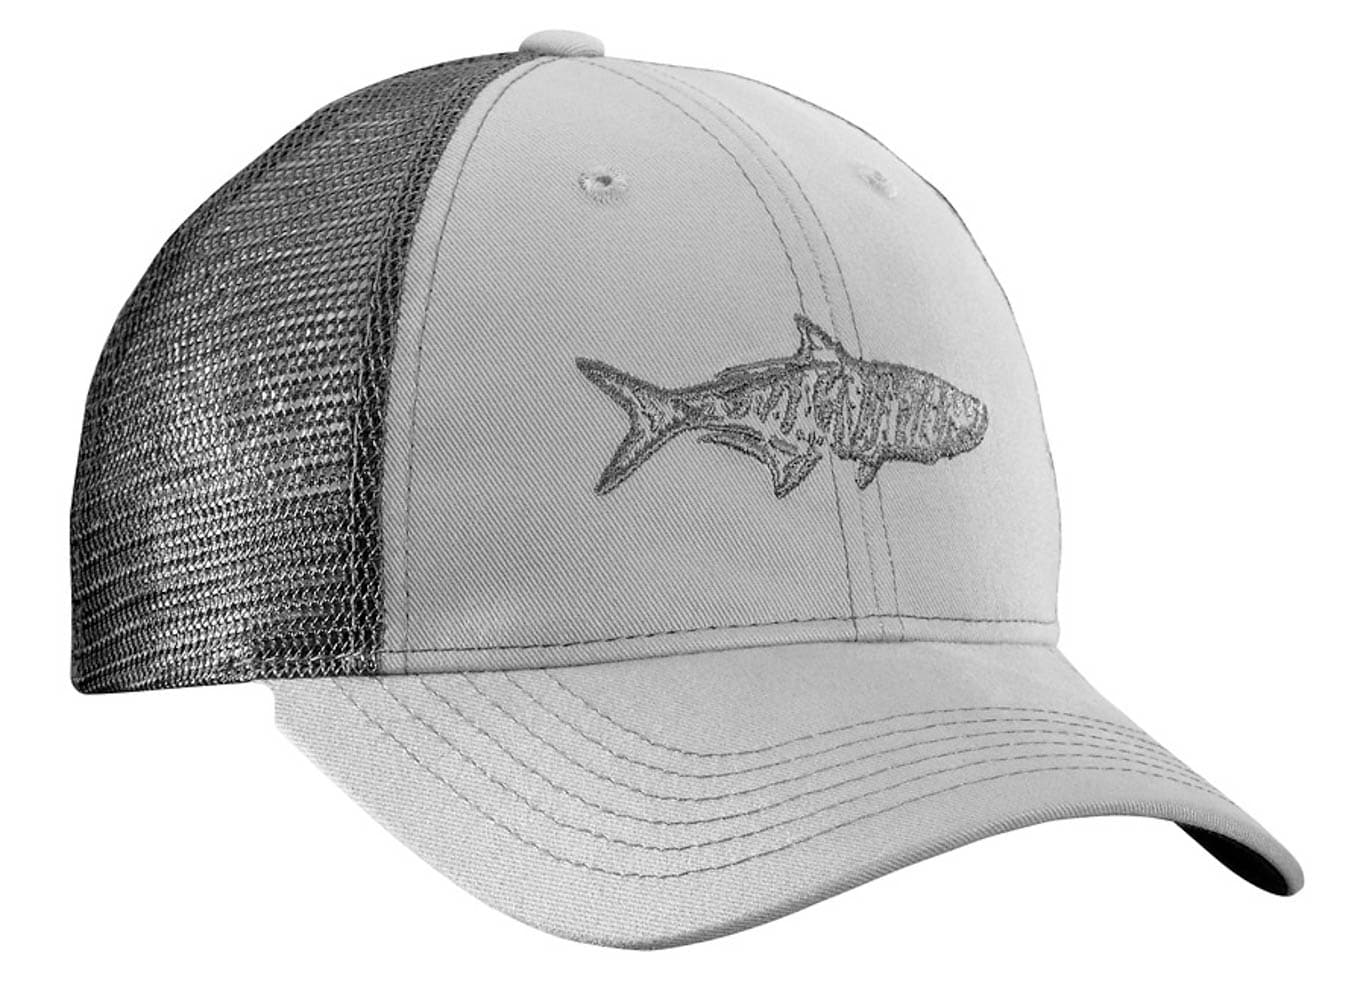 Flying Fisherman Unisex Gray/Charcoal Mesh Back Cotton Fishing Hat